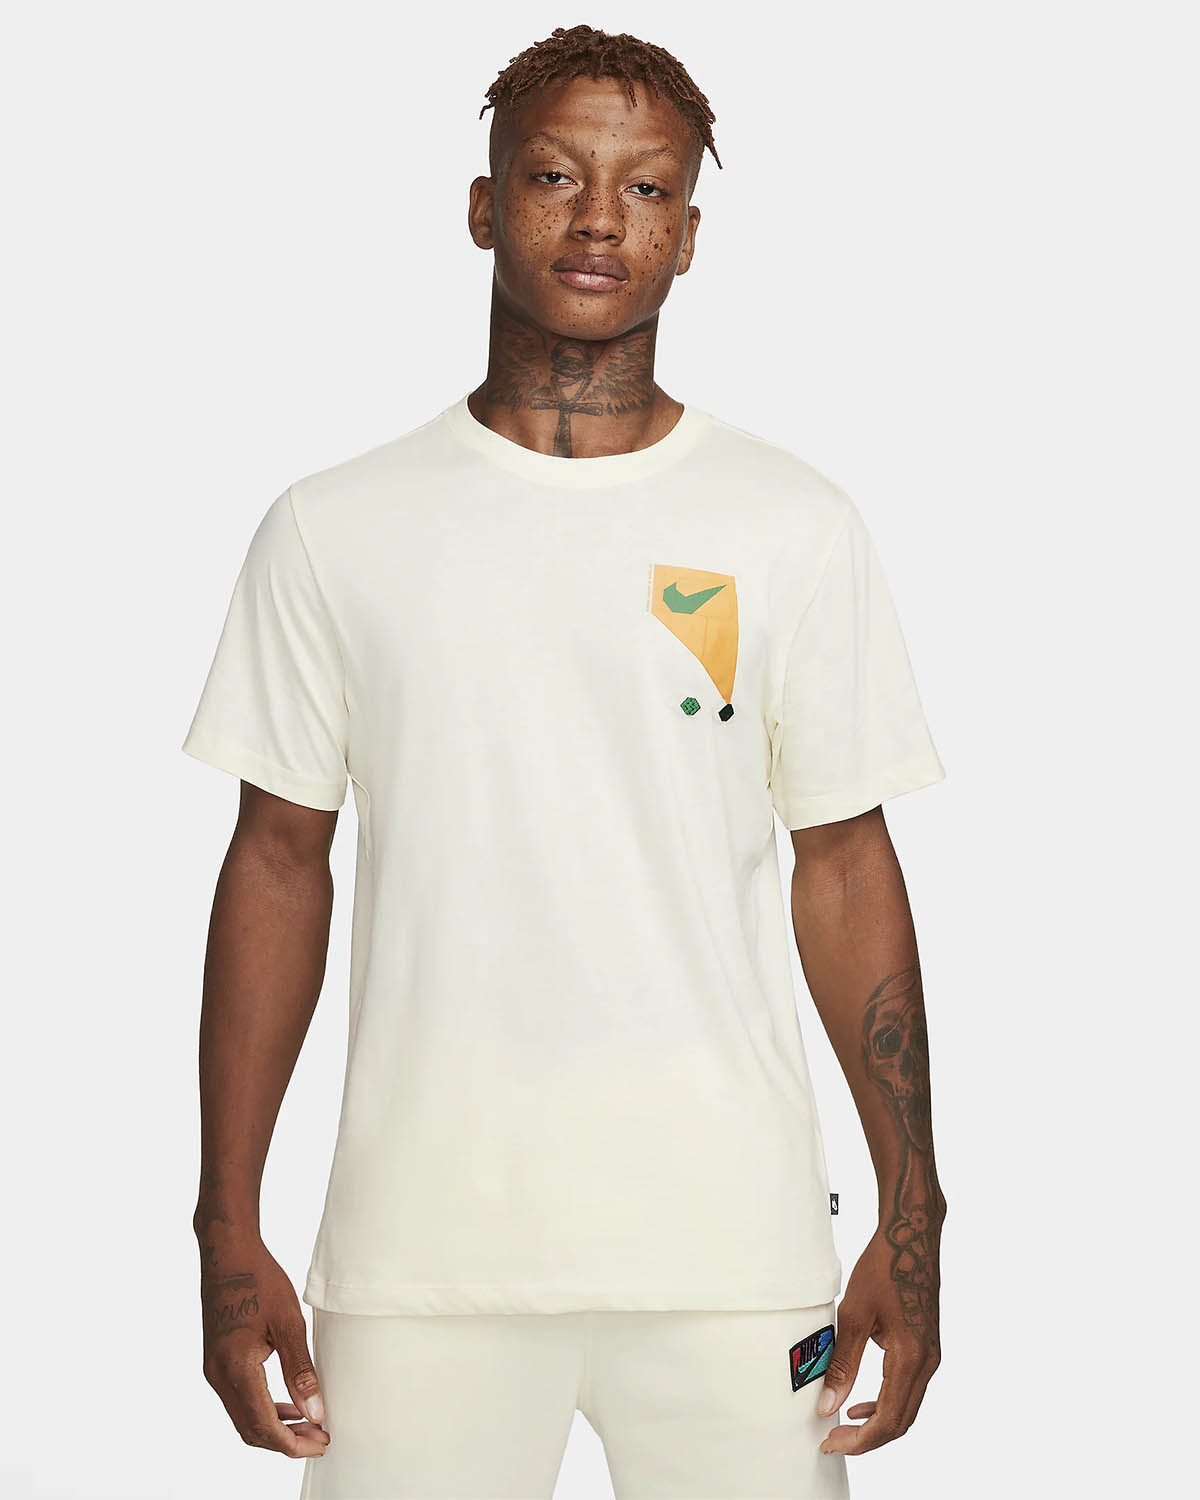 Nike Dunk Low Premium University Gold Coconut Milk Shirt 1